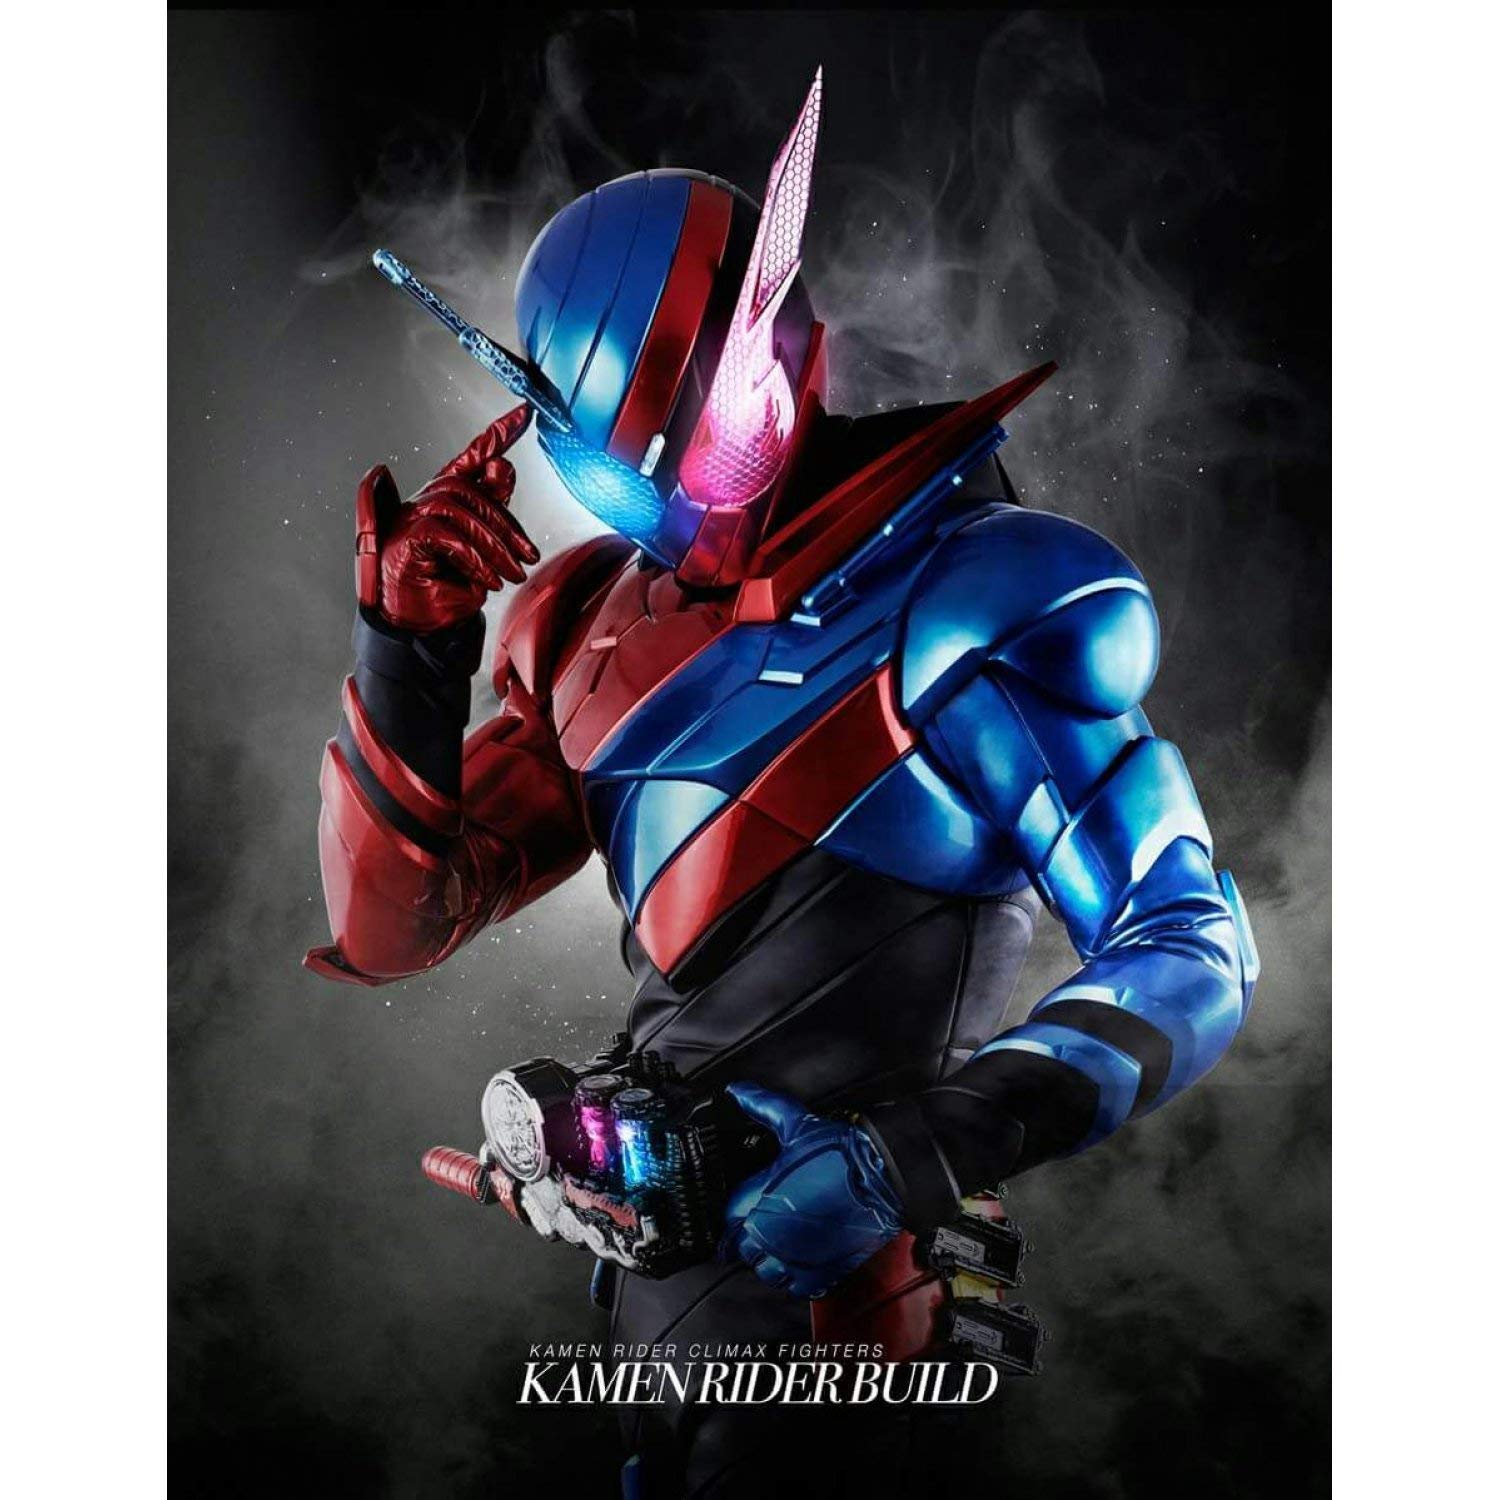 Kamen Rider Climax Fighters